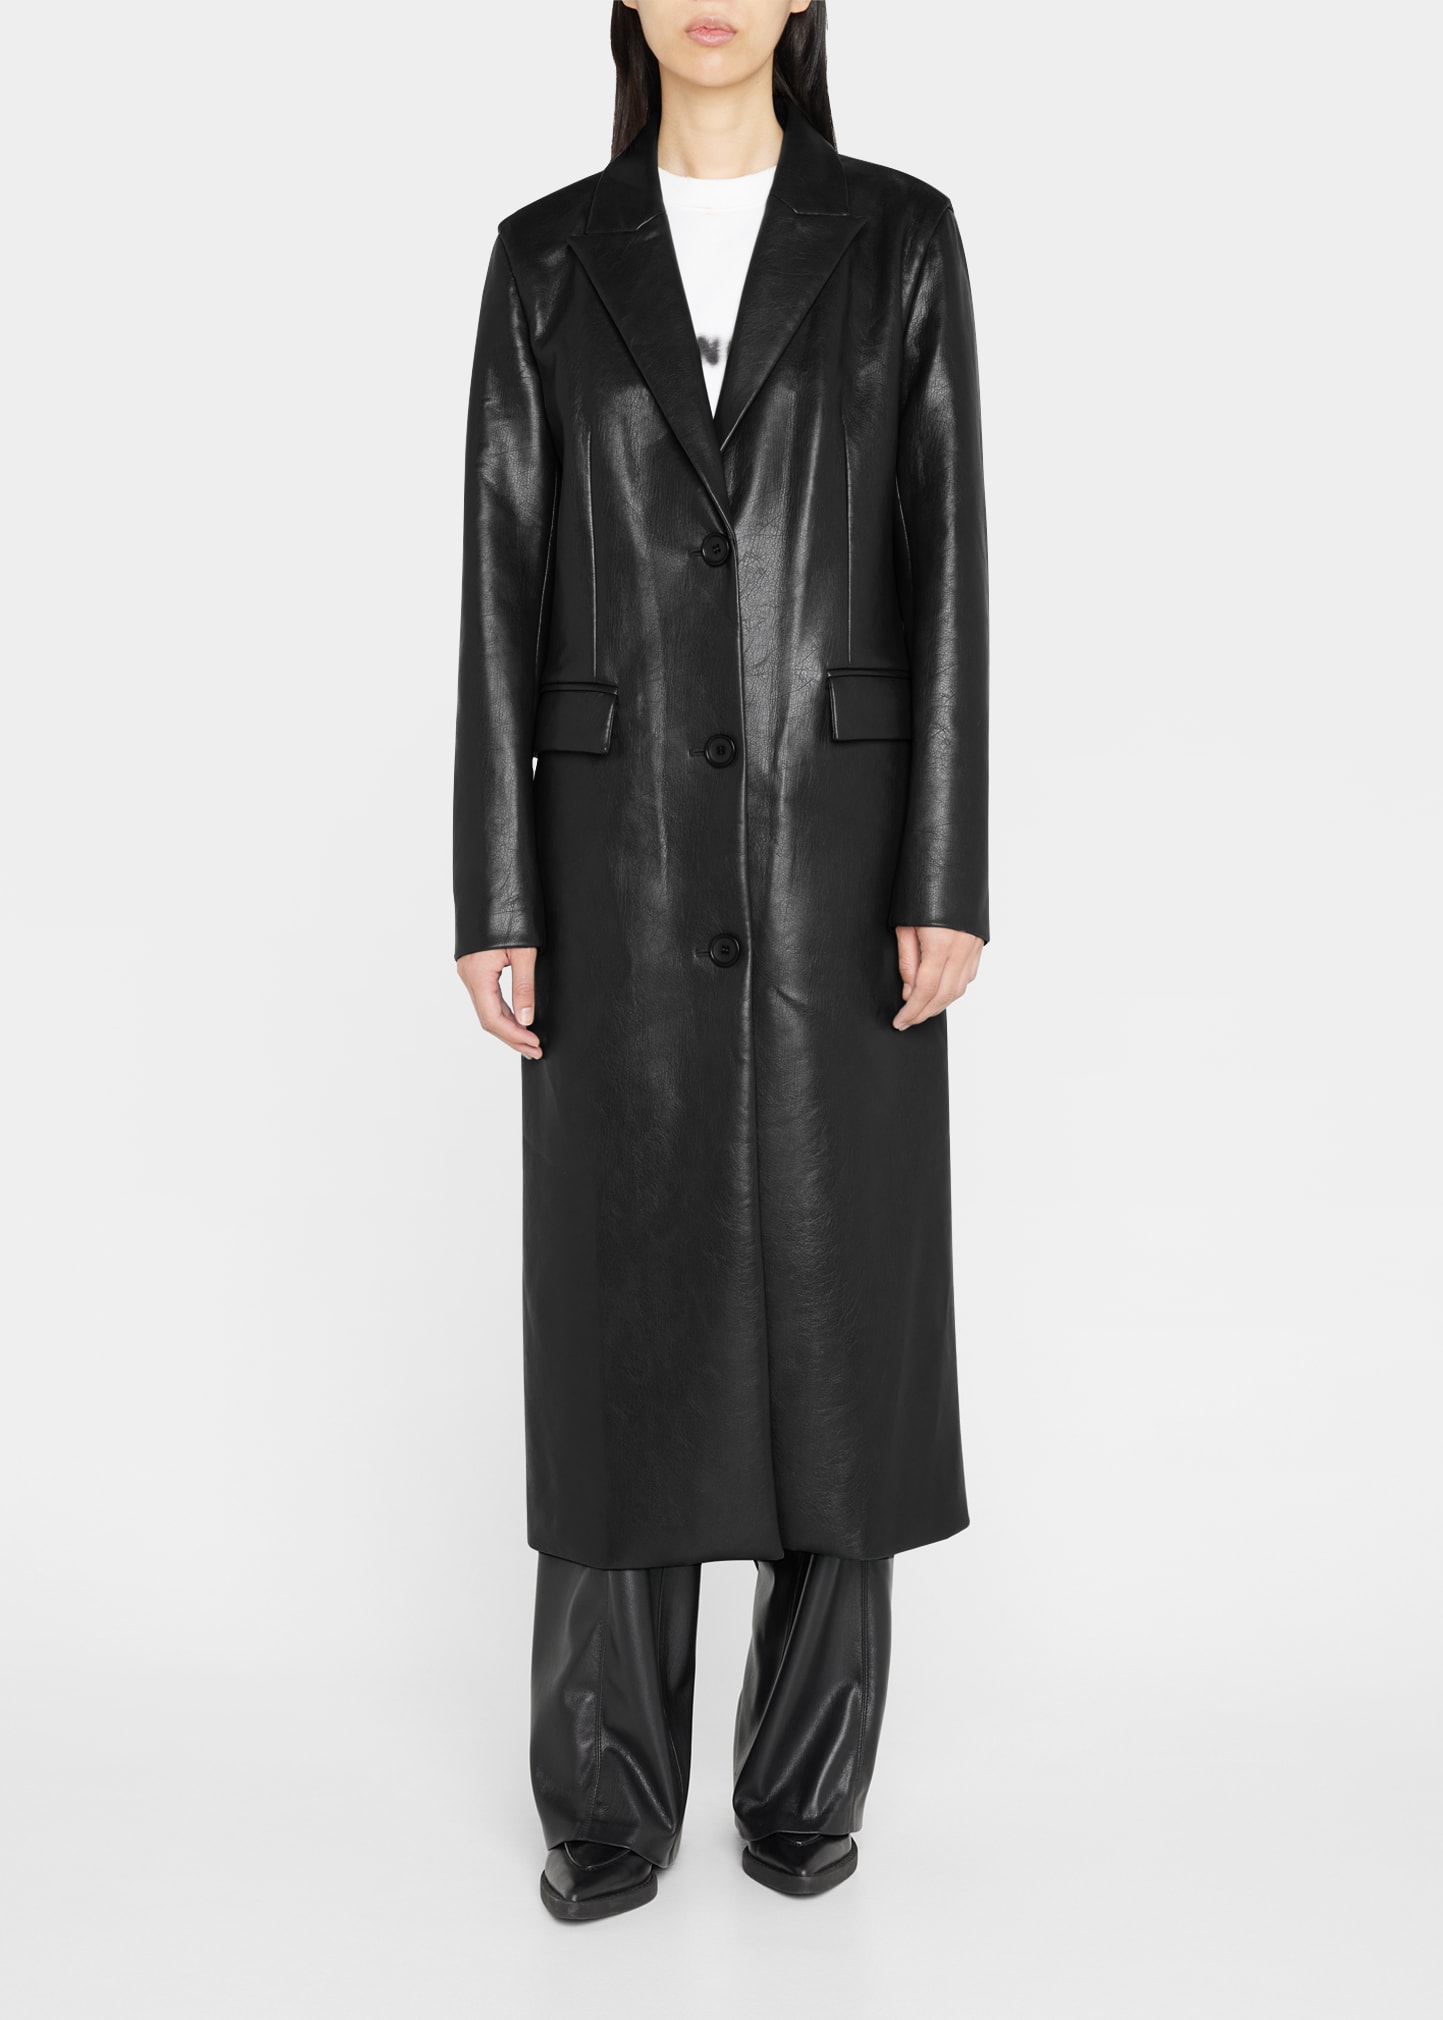 Zoie Faux Leather Long Coat